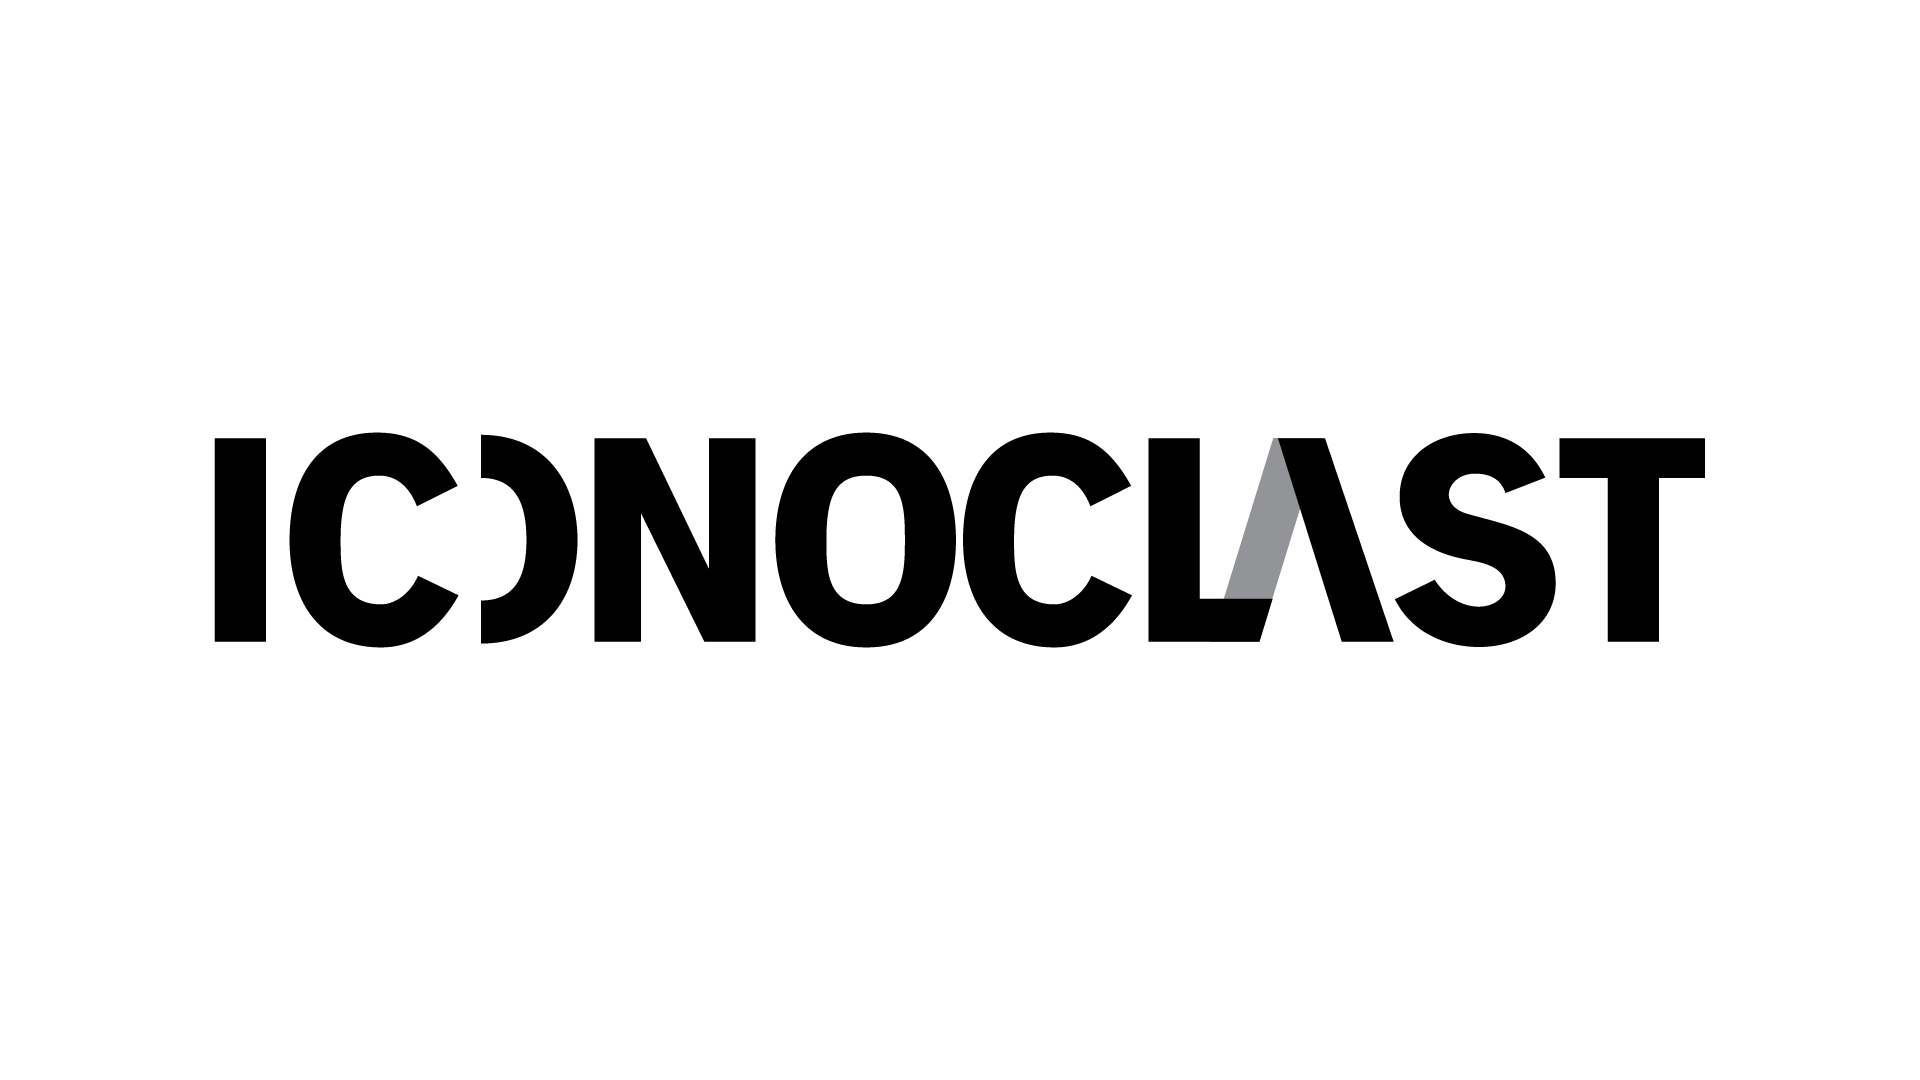 Iconoclast_1920x1080_Black_Logo.jpg